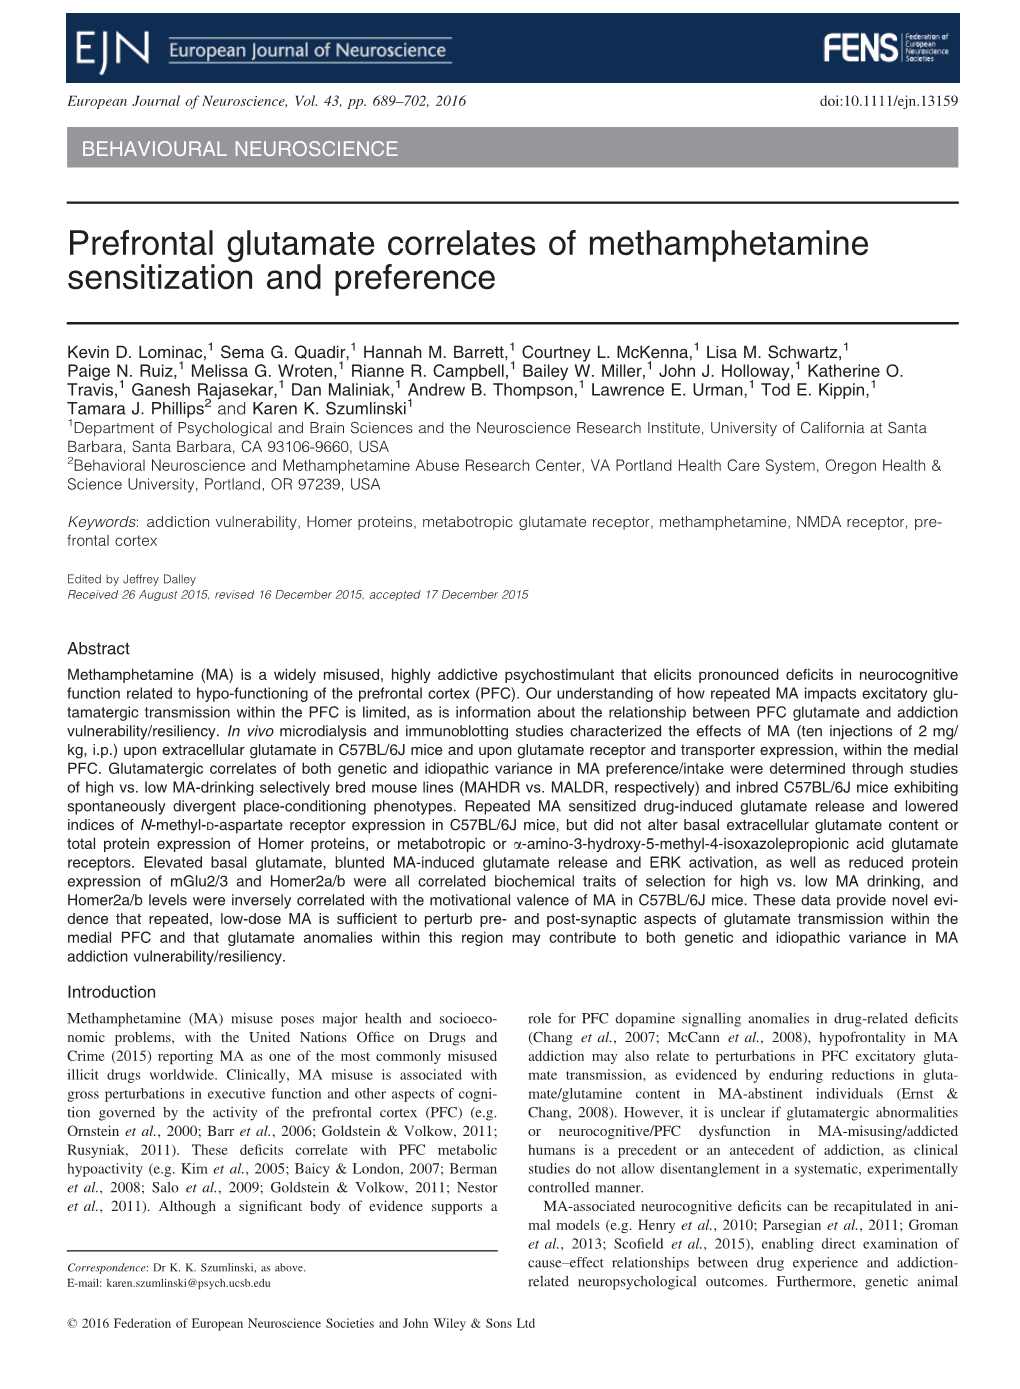 Prefrontal Glutamate Correlates of Methamphetamine Sensitization and Preference